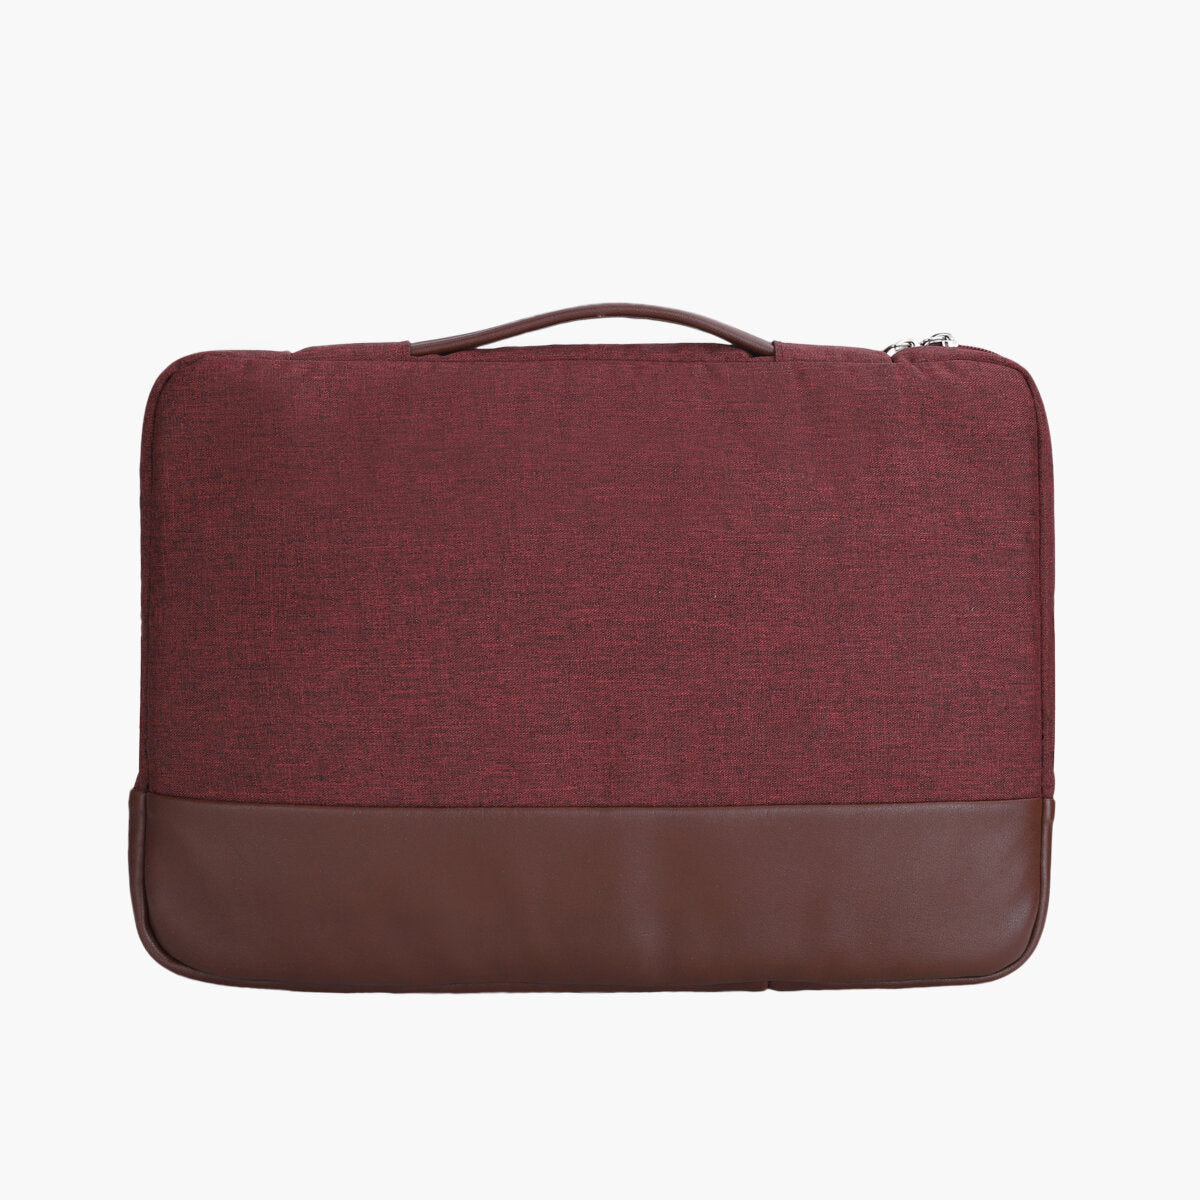 Rust Red | Protecta Lima Laptop Bag